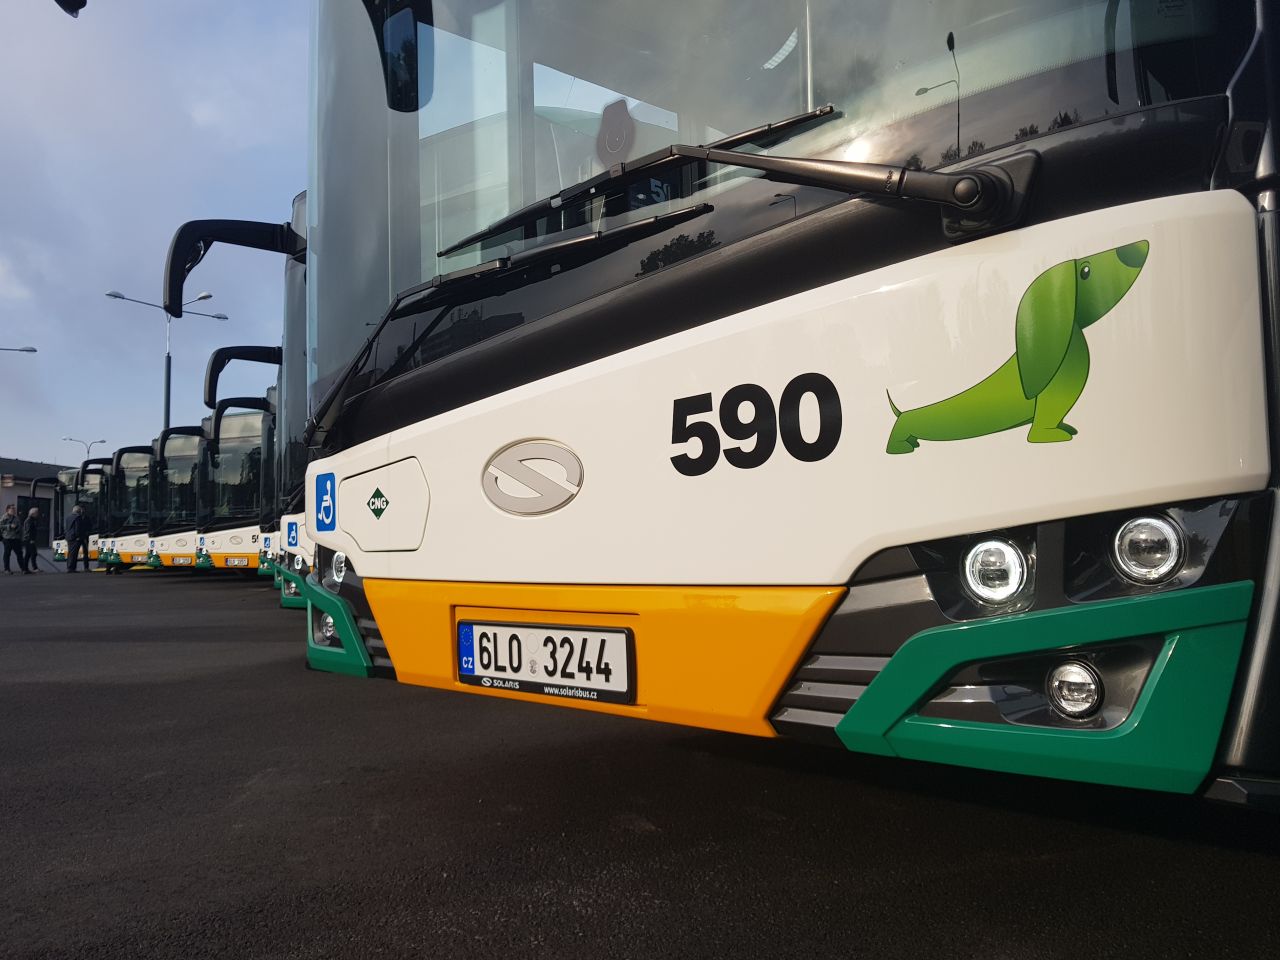 Nové autobusy Solaris Urbino 18 pro DPMLJ. Foto: Jan Sůra / Zdopravy.cz